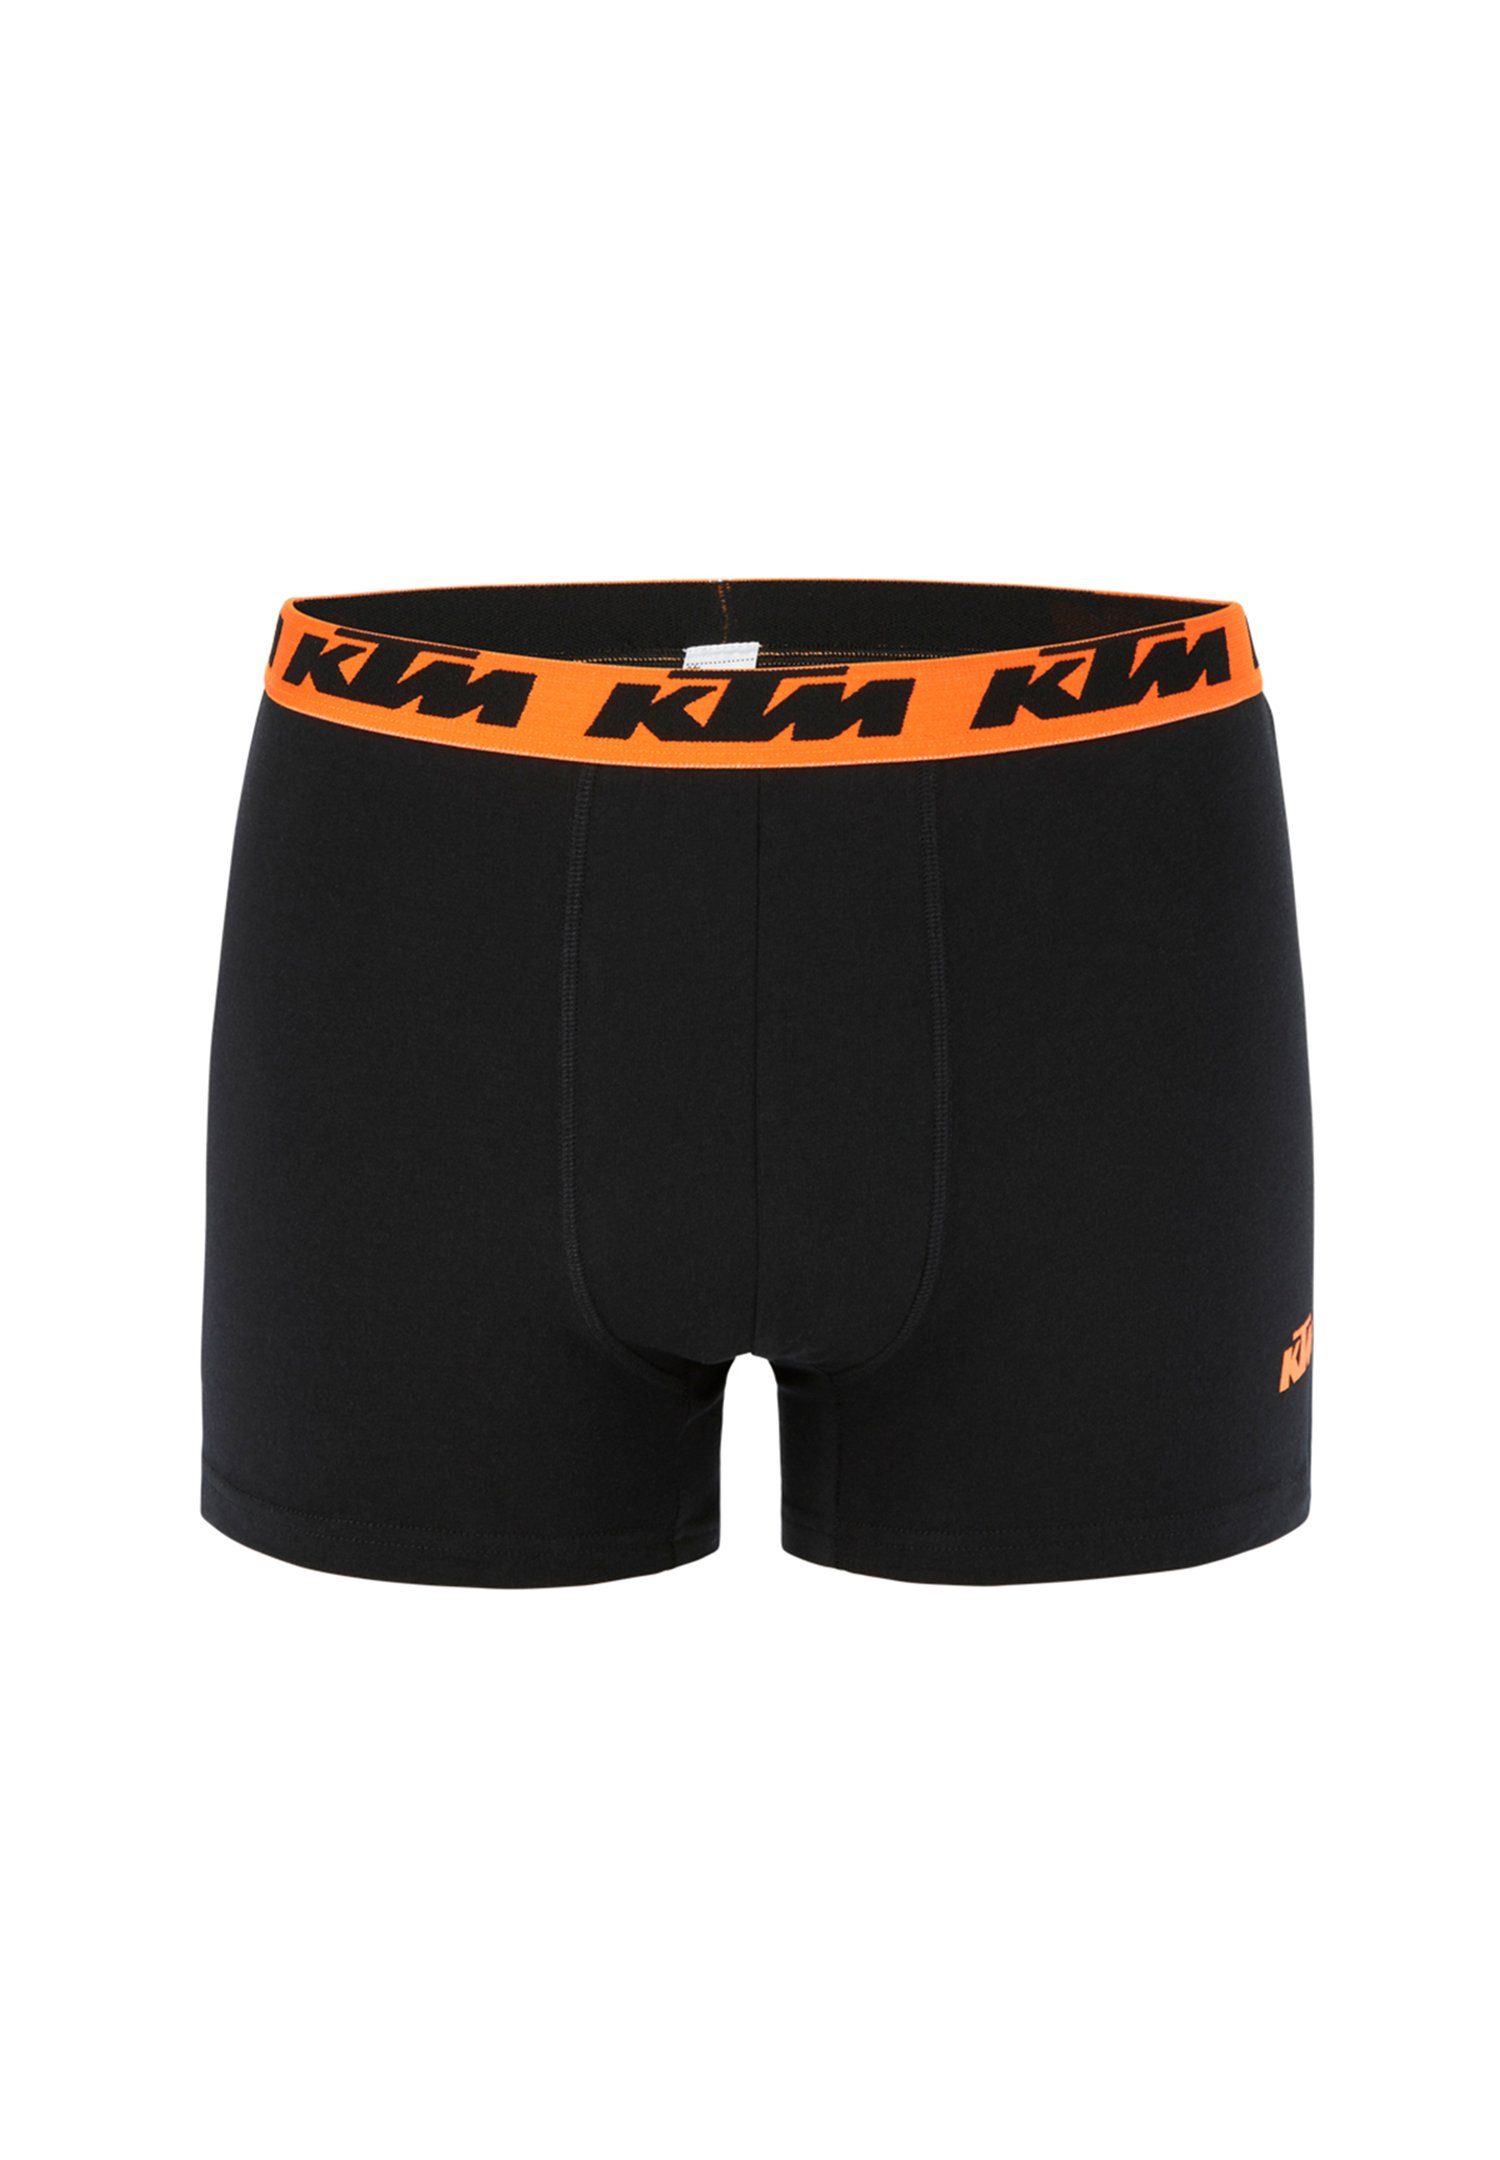 (2-St) Cotton KTM Black2 Boxer Boxershorts X2 Pack Man